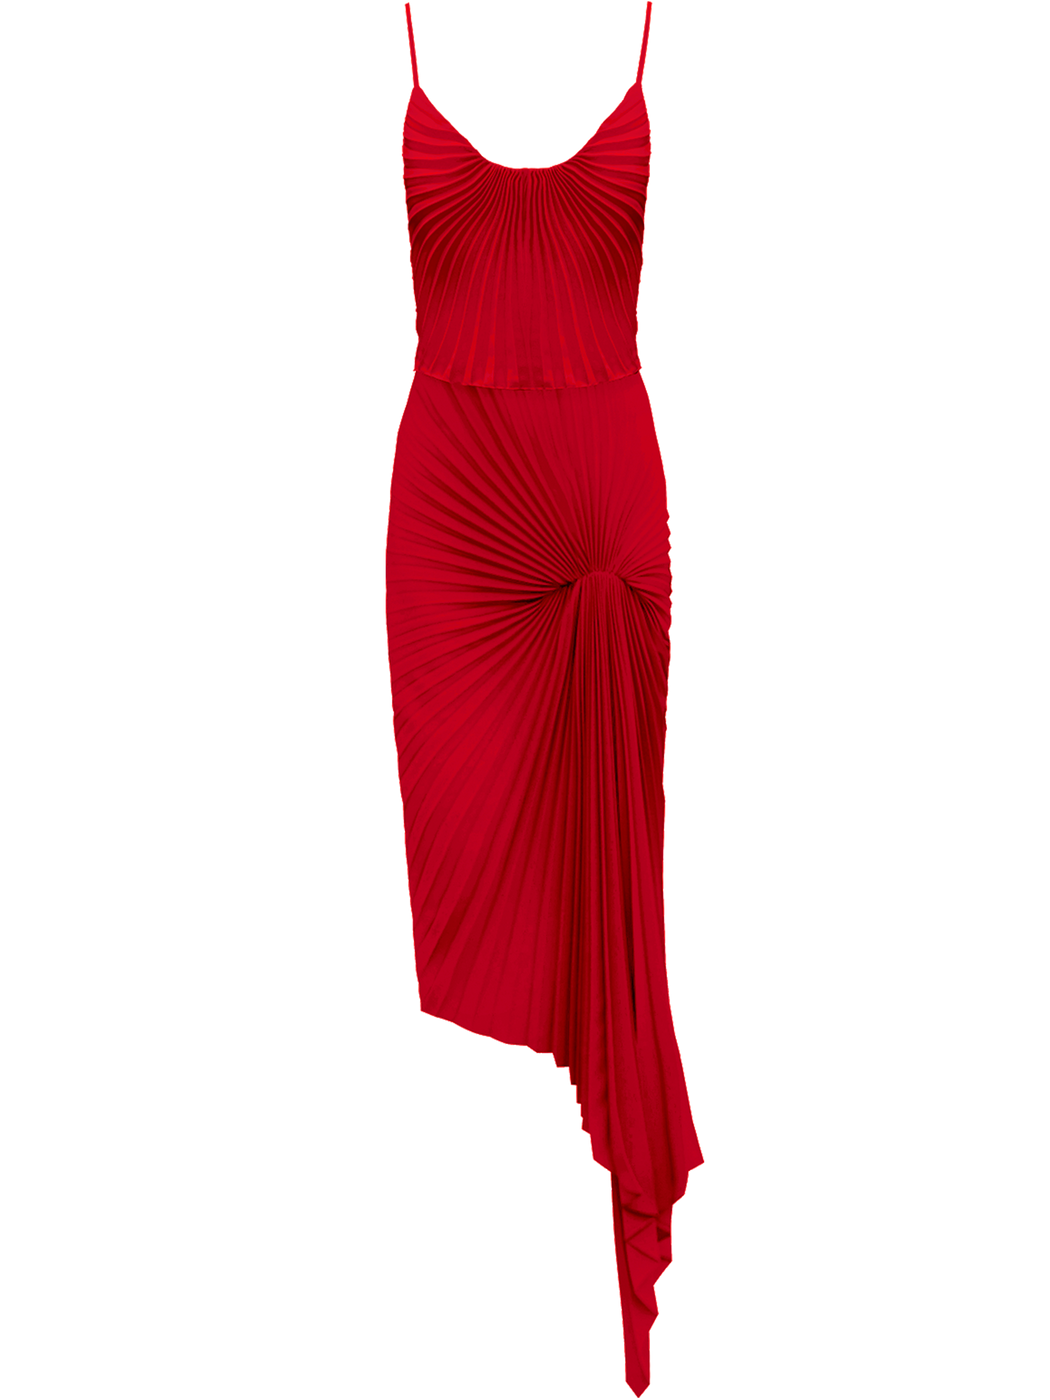 Georgia Hardinge Red Dazed Dress bestseller cocktail pleated asymmetric strappy wedding guest occasionwear